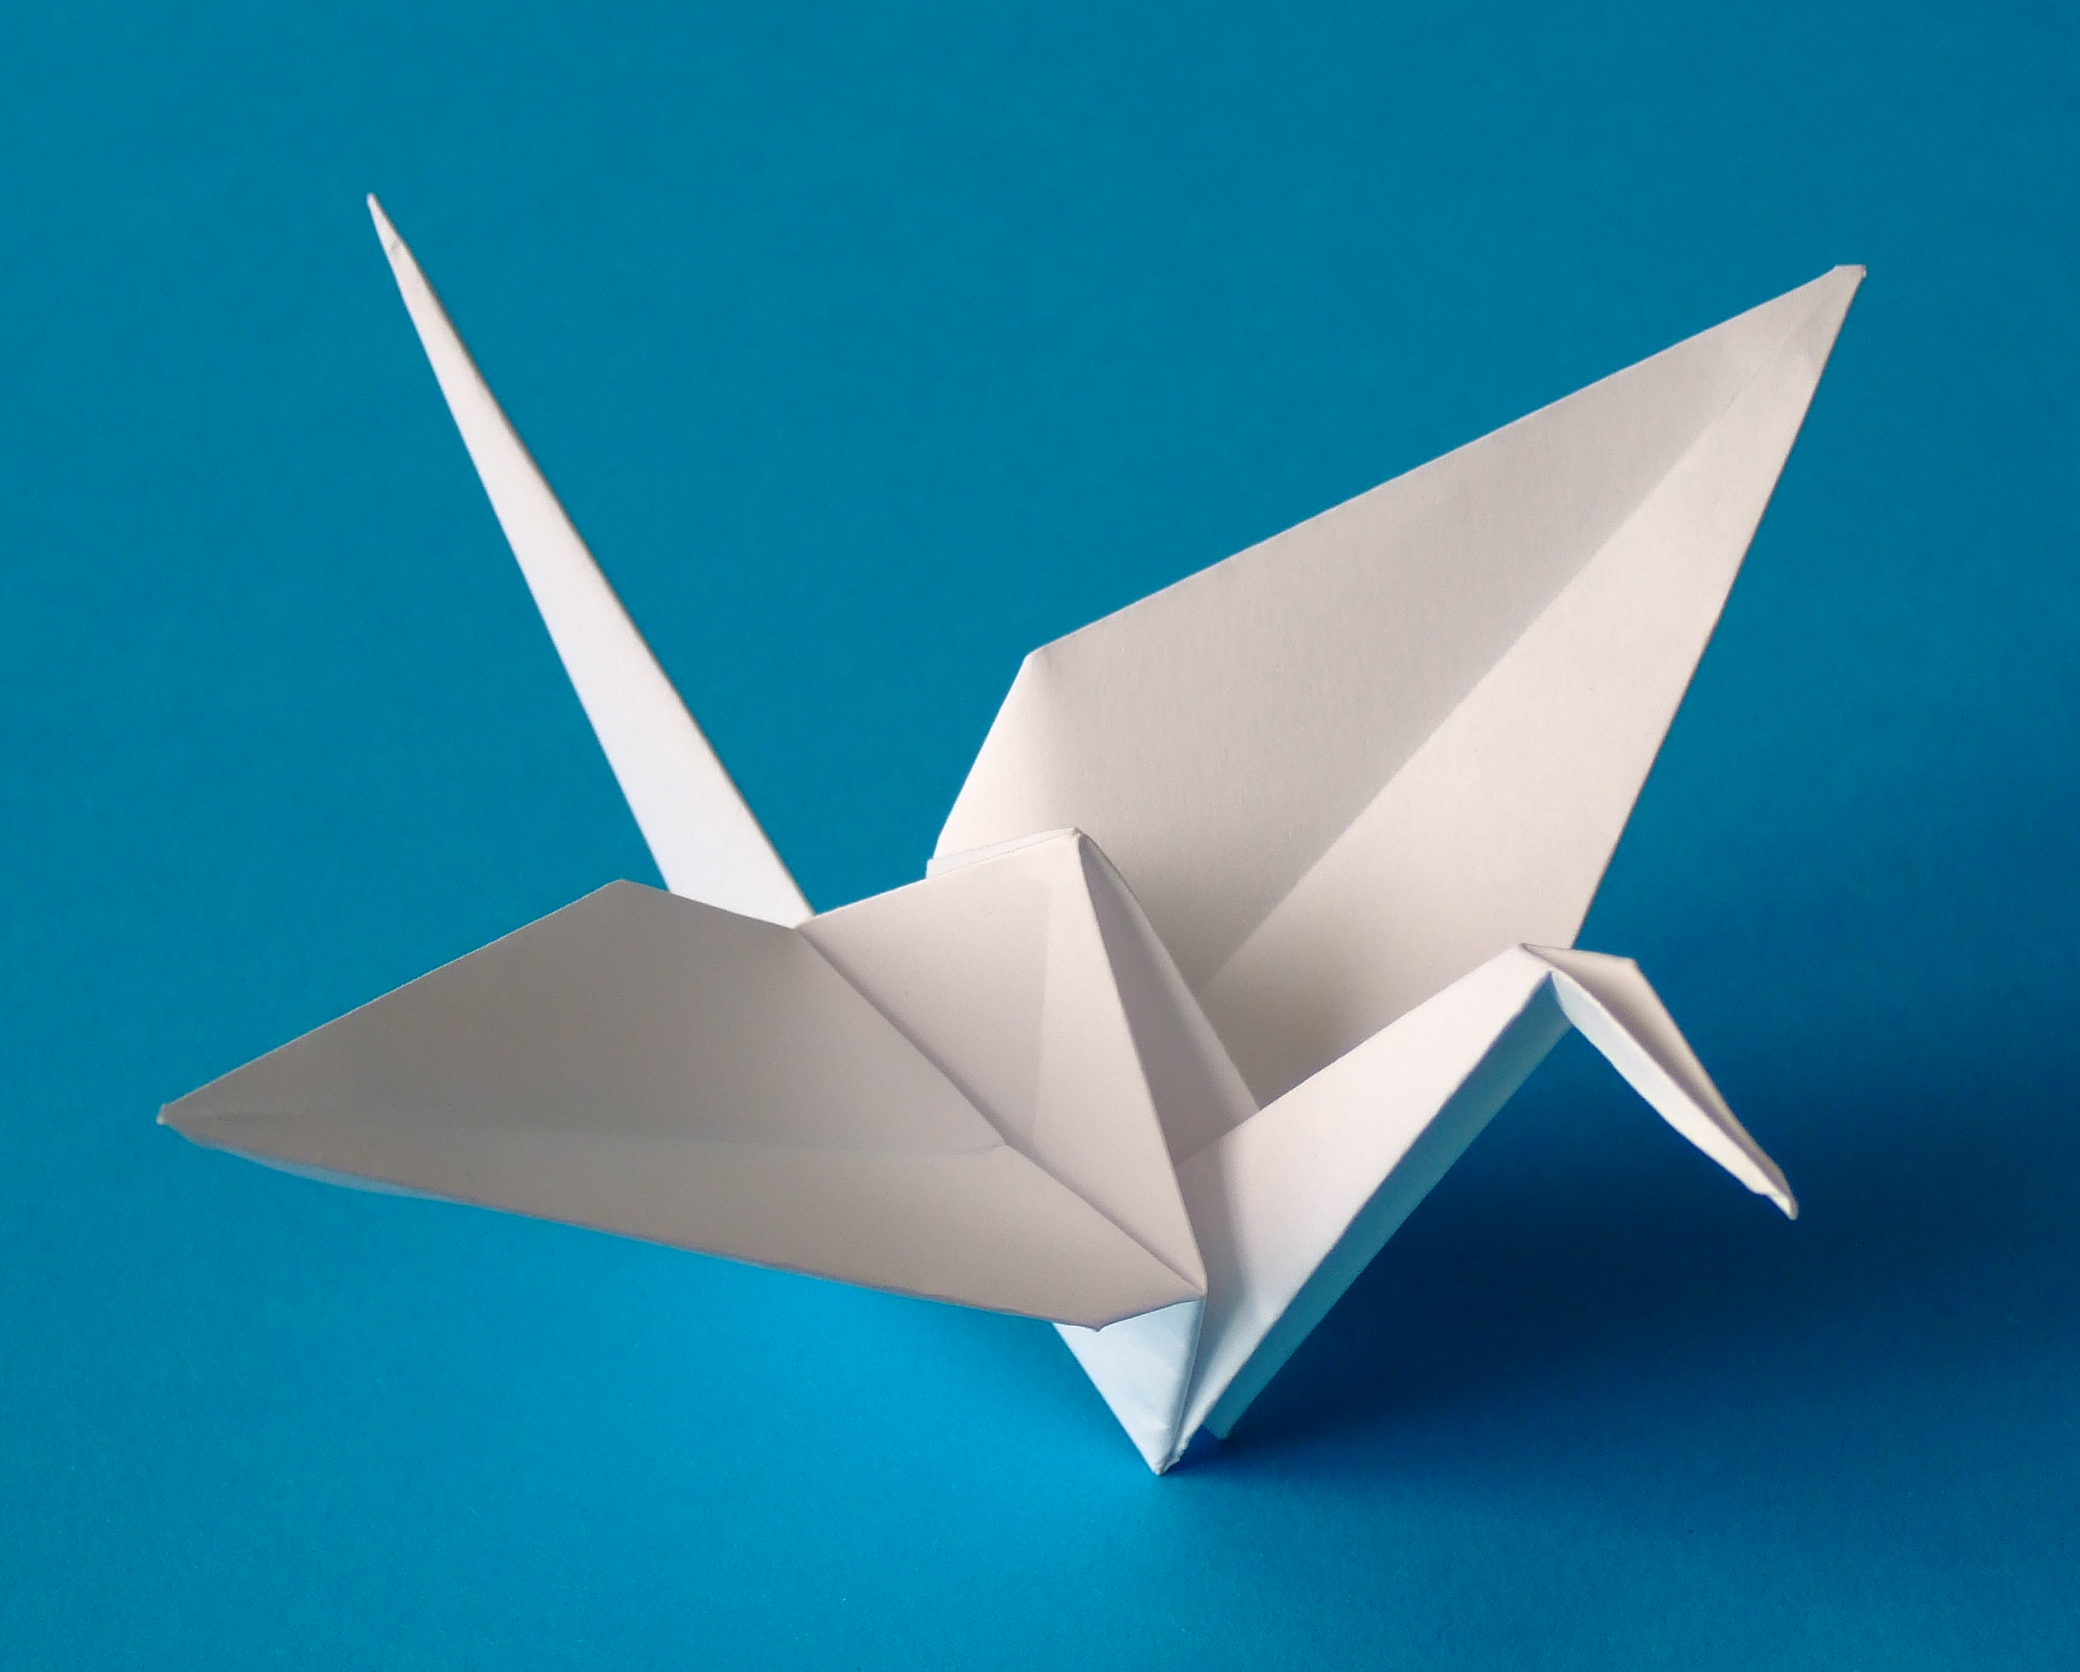 An origami crane